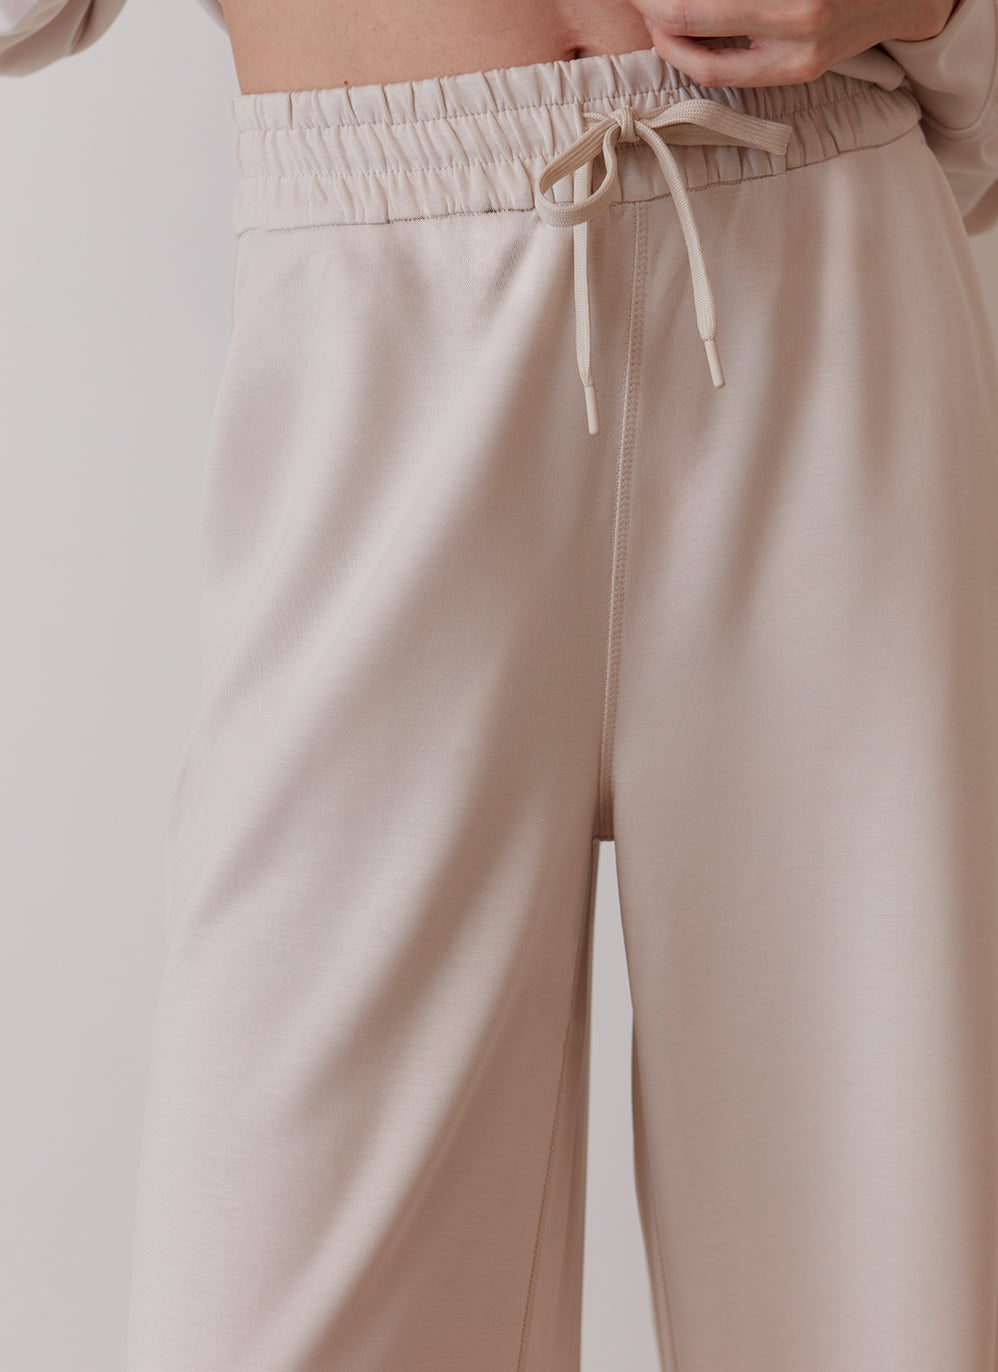 elastic waist with tie on cream wide leg sweatpants